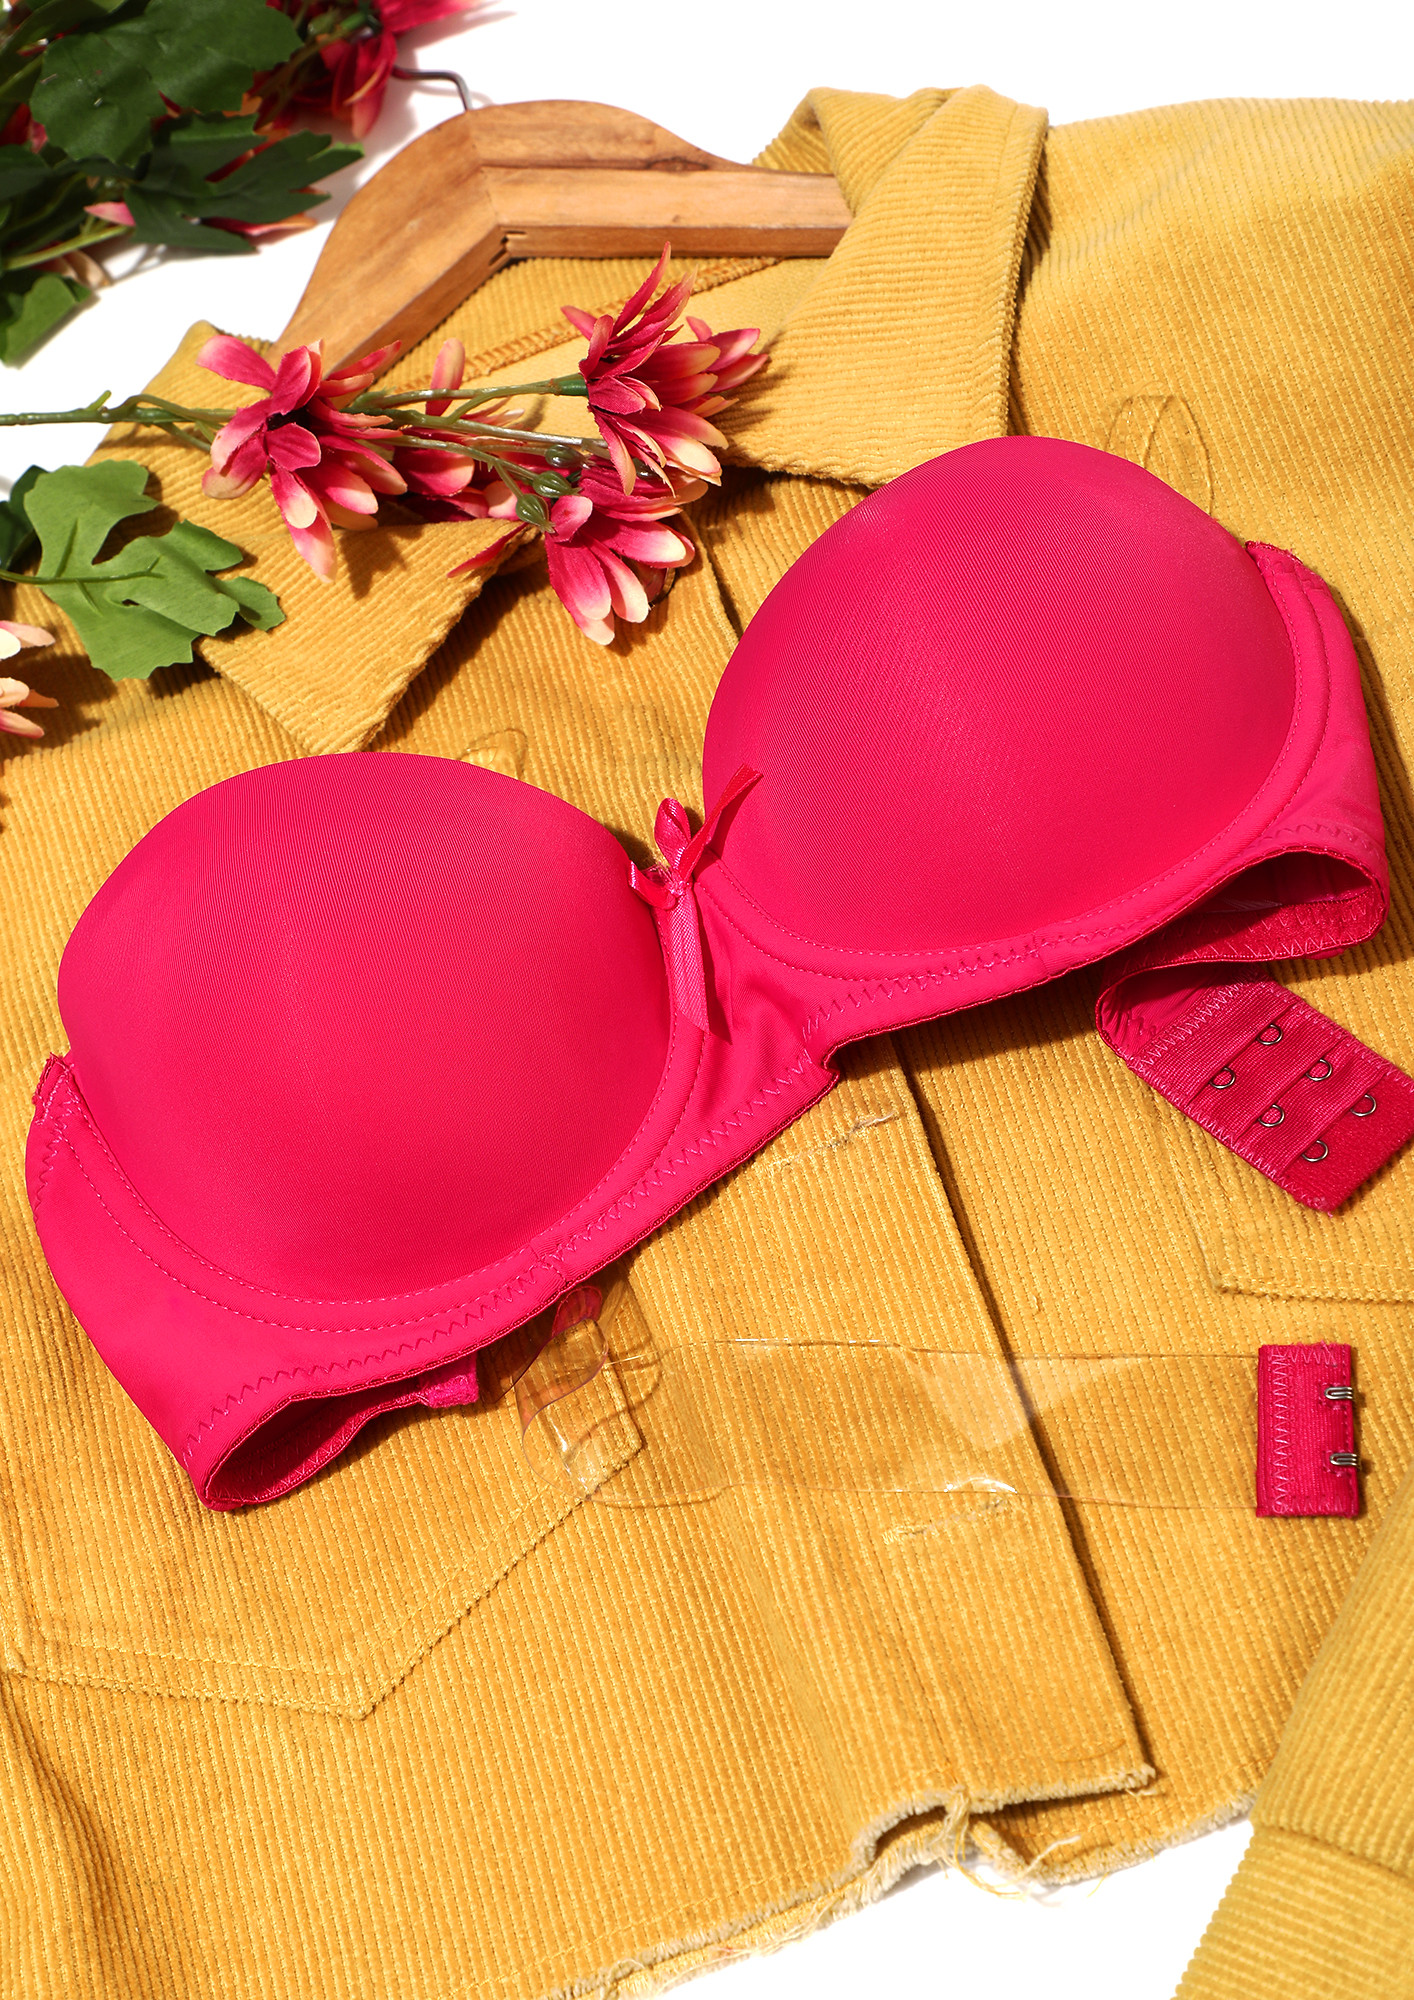 Hot pink bra